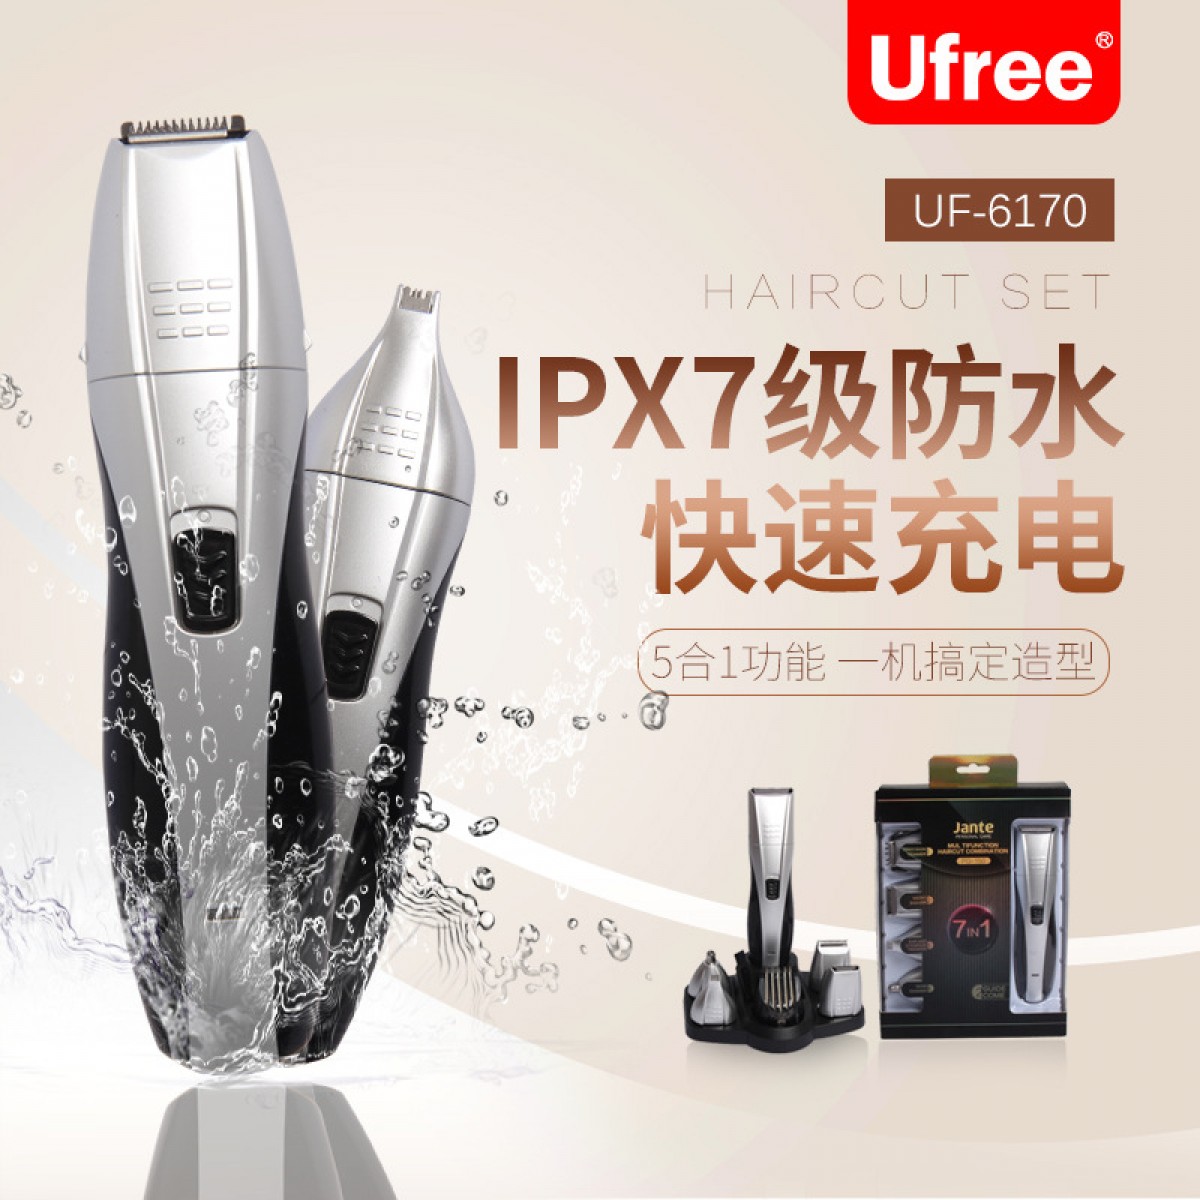 Ufree五合一多功能理发器充电电推剪IPX7防水鼻毛器修鬓角剃须刀